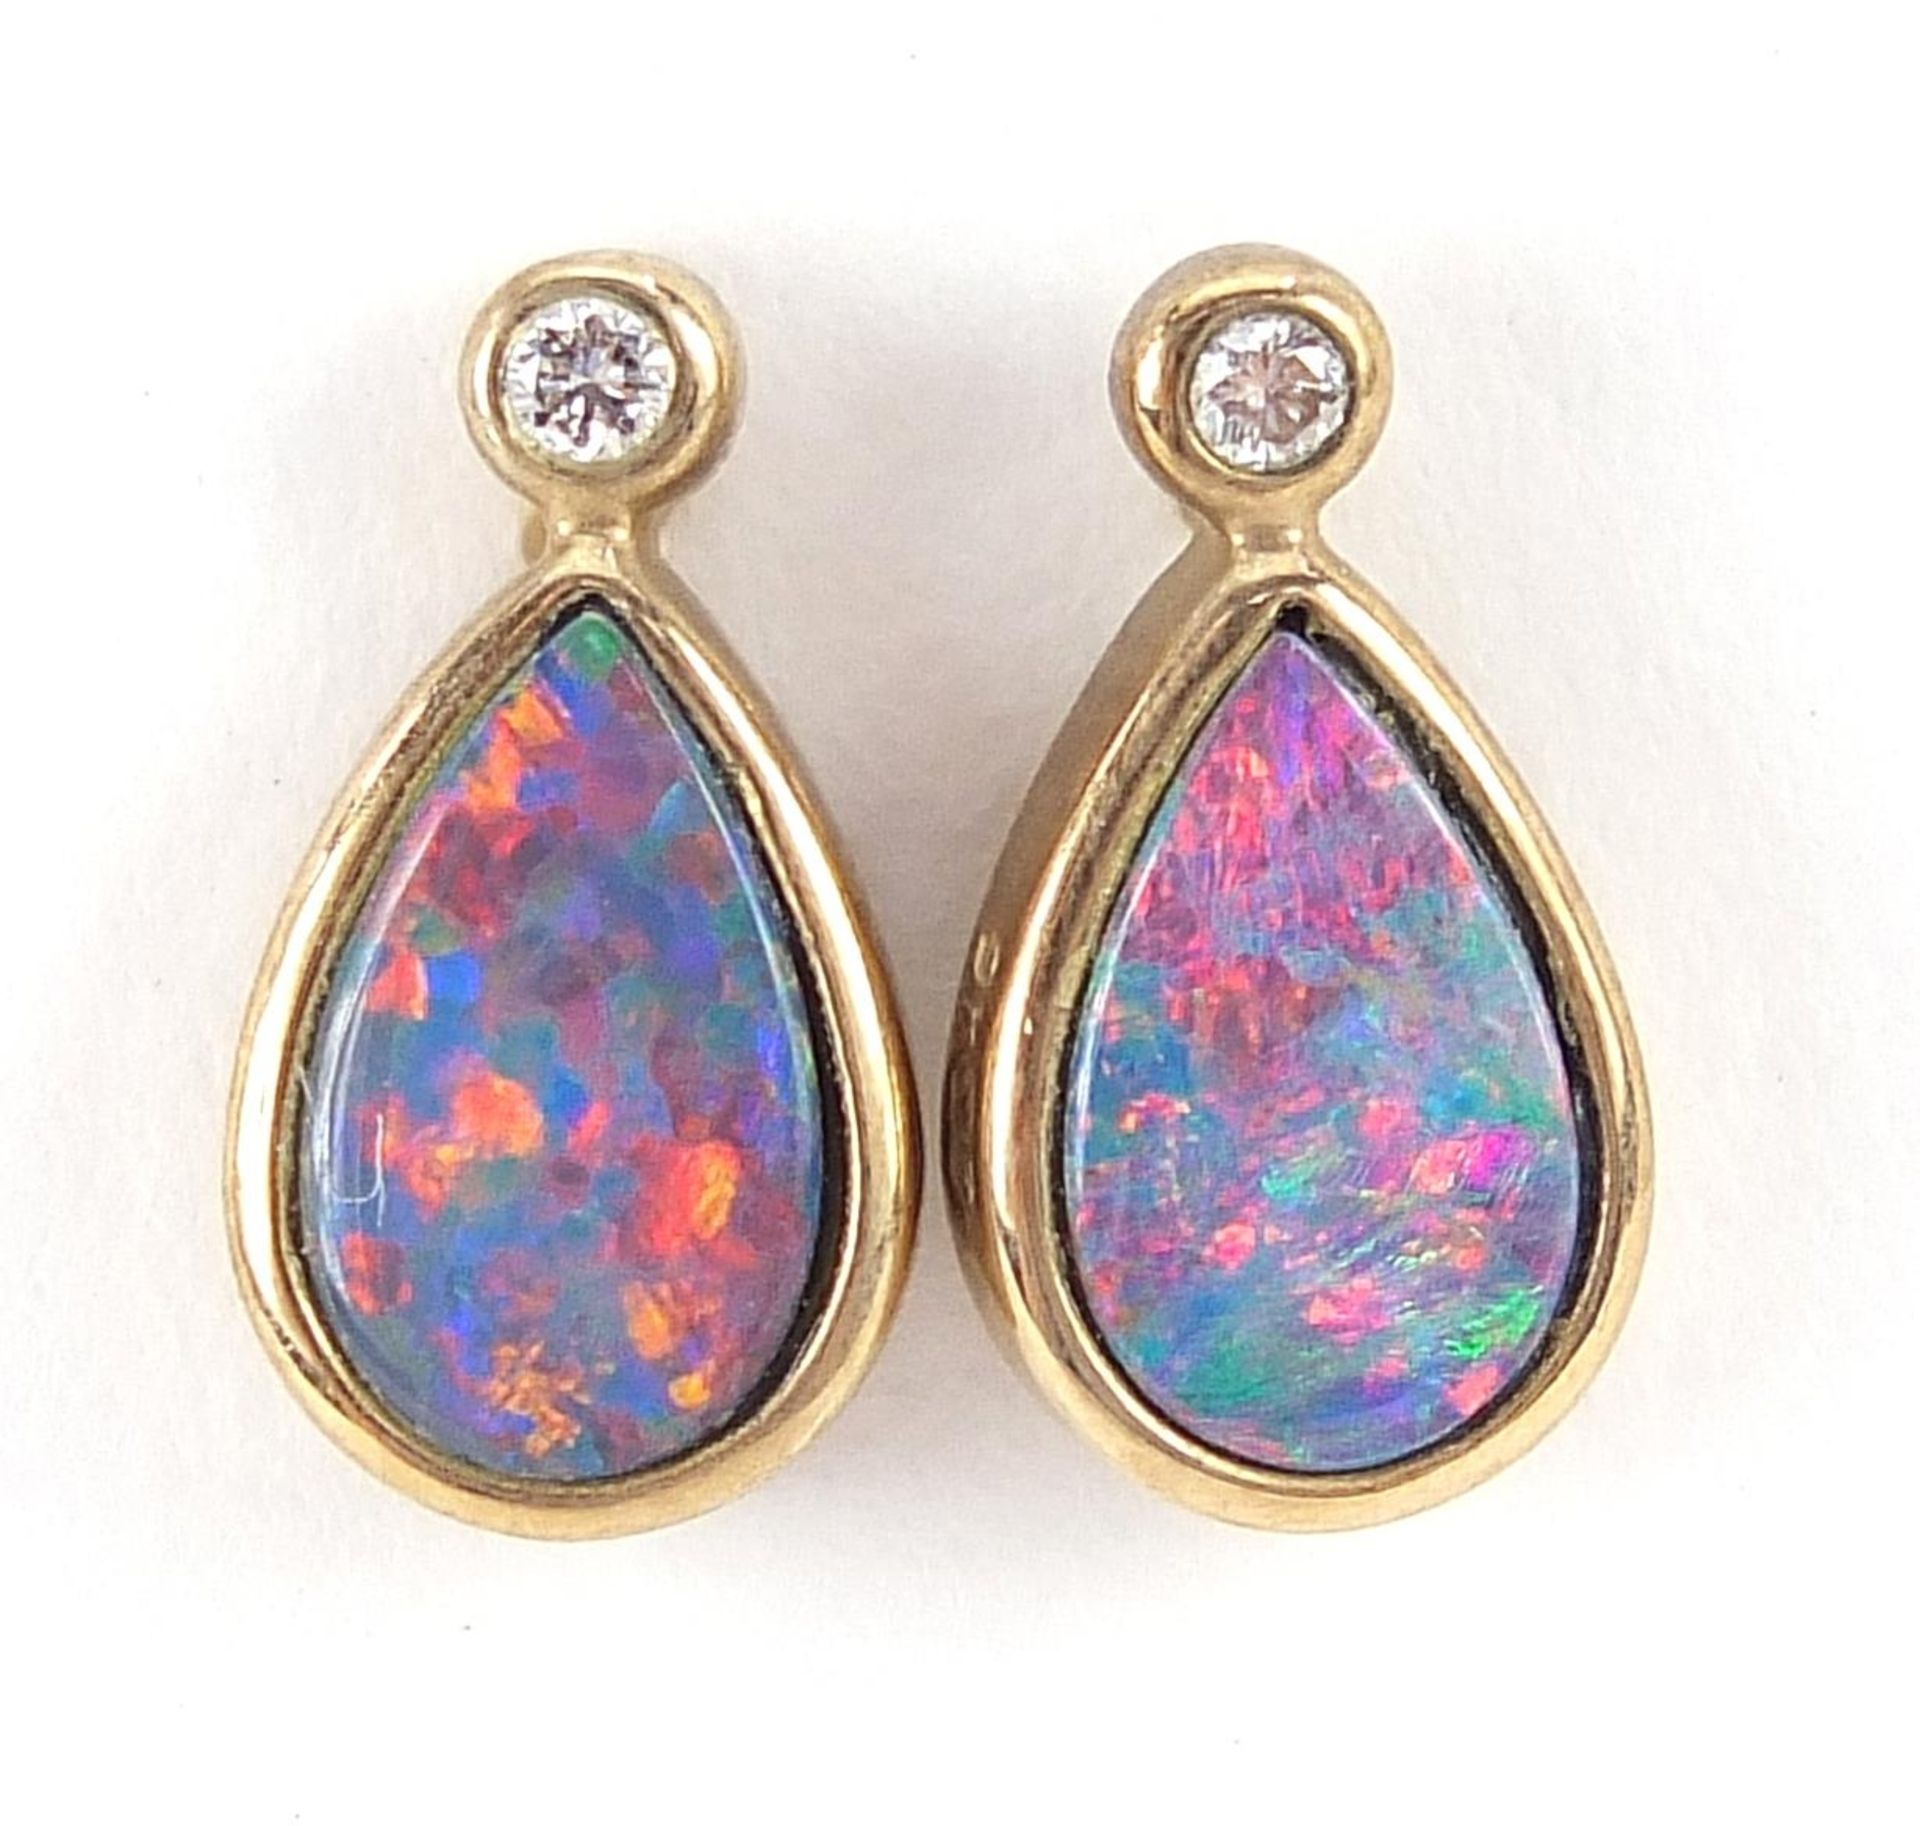 Pair of 9ct gold diamond and opal tear drop stud earrings, 1.2cm high, 1.2g